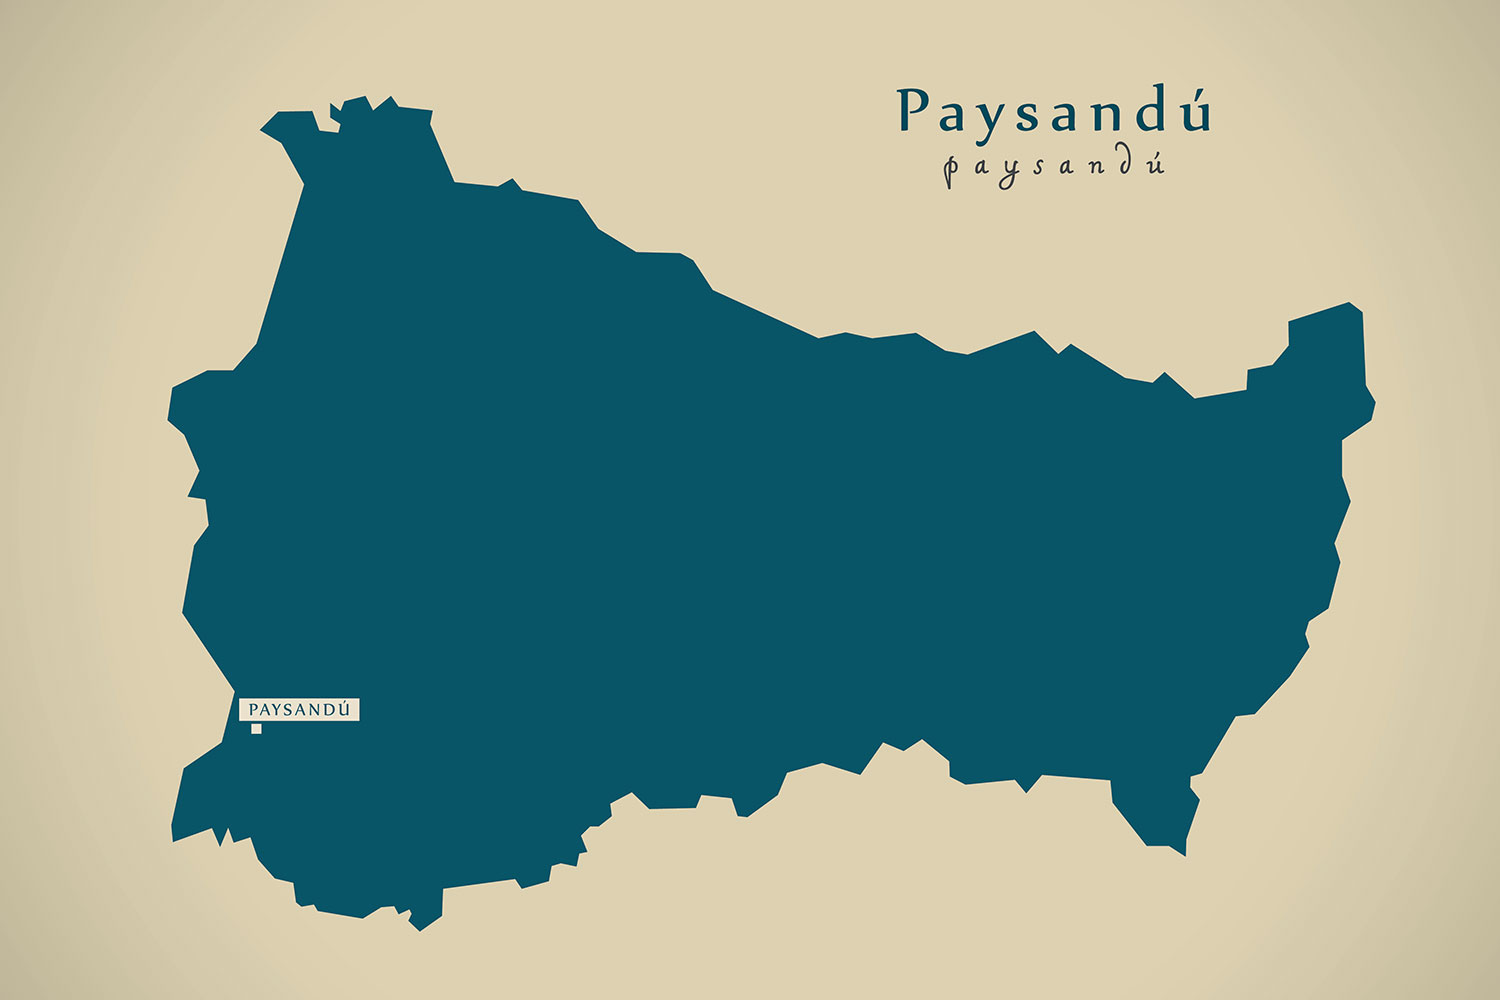 mapa de Paisandú, en Uruguay